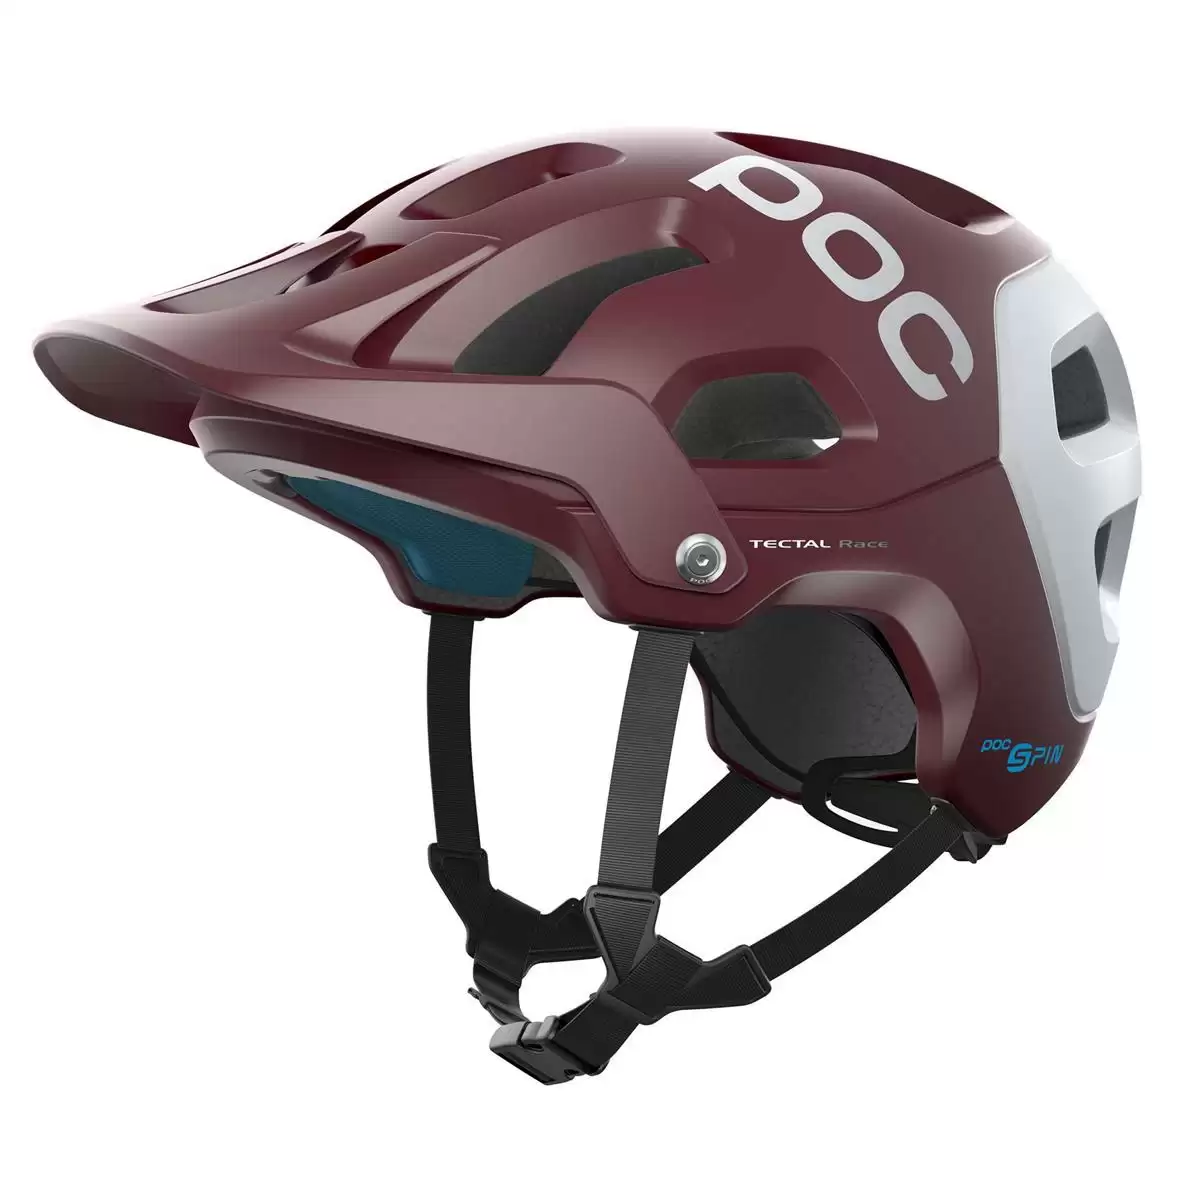 Enduro Helmet Tectal Race Spin Red Size M-L (55-58cm) - image